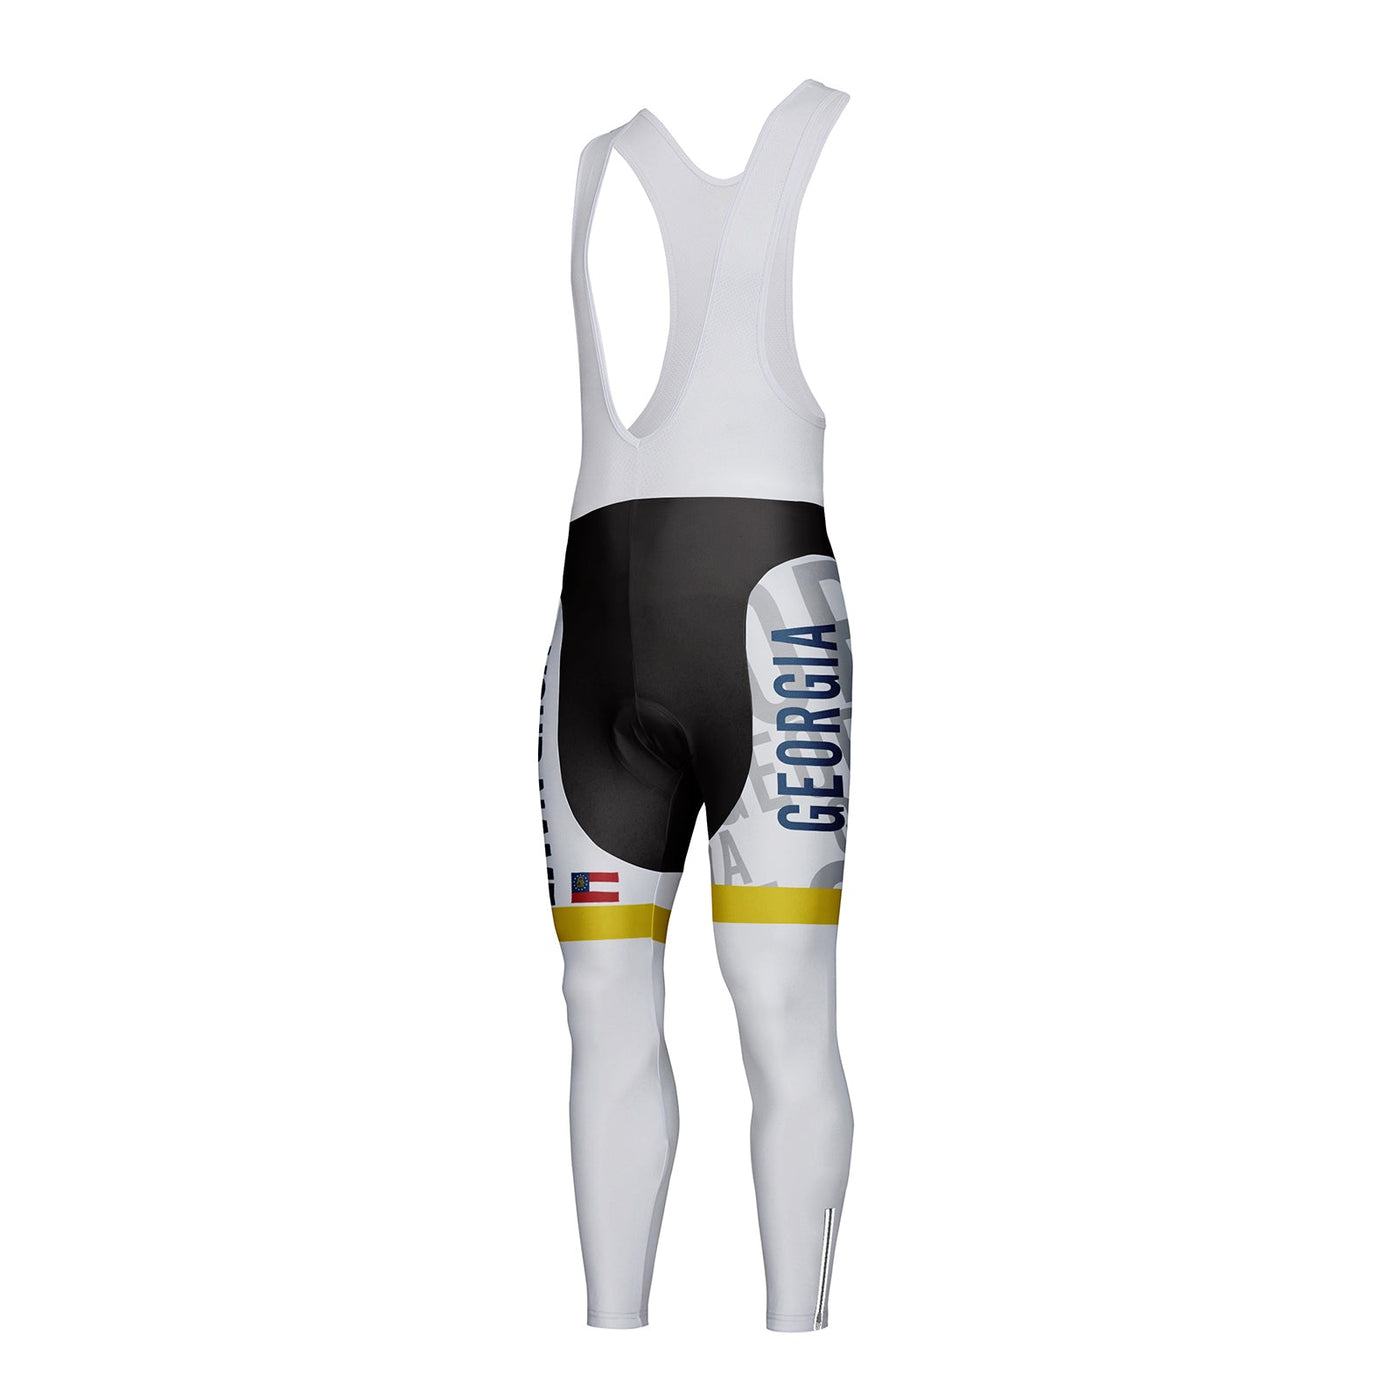 Customized Georgia Unisex Thermal Fleece Cycling Bib Tights Long Pants